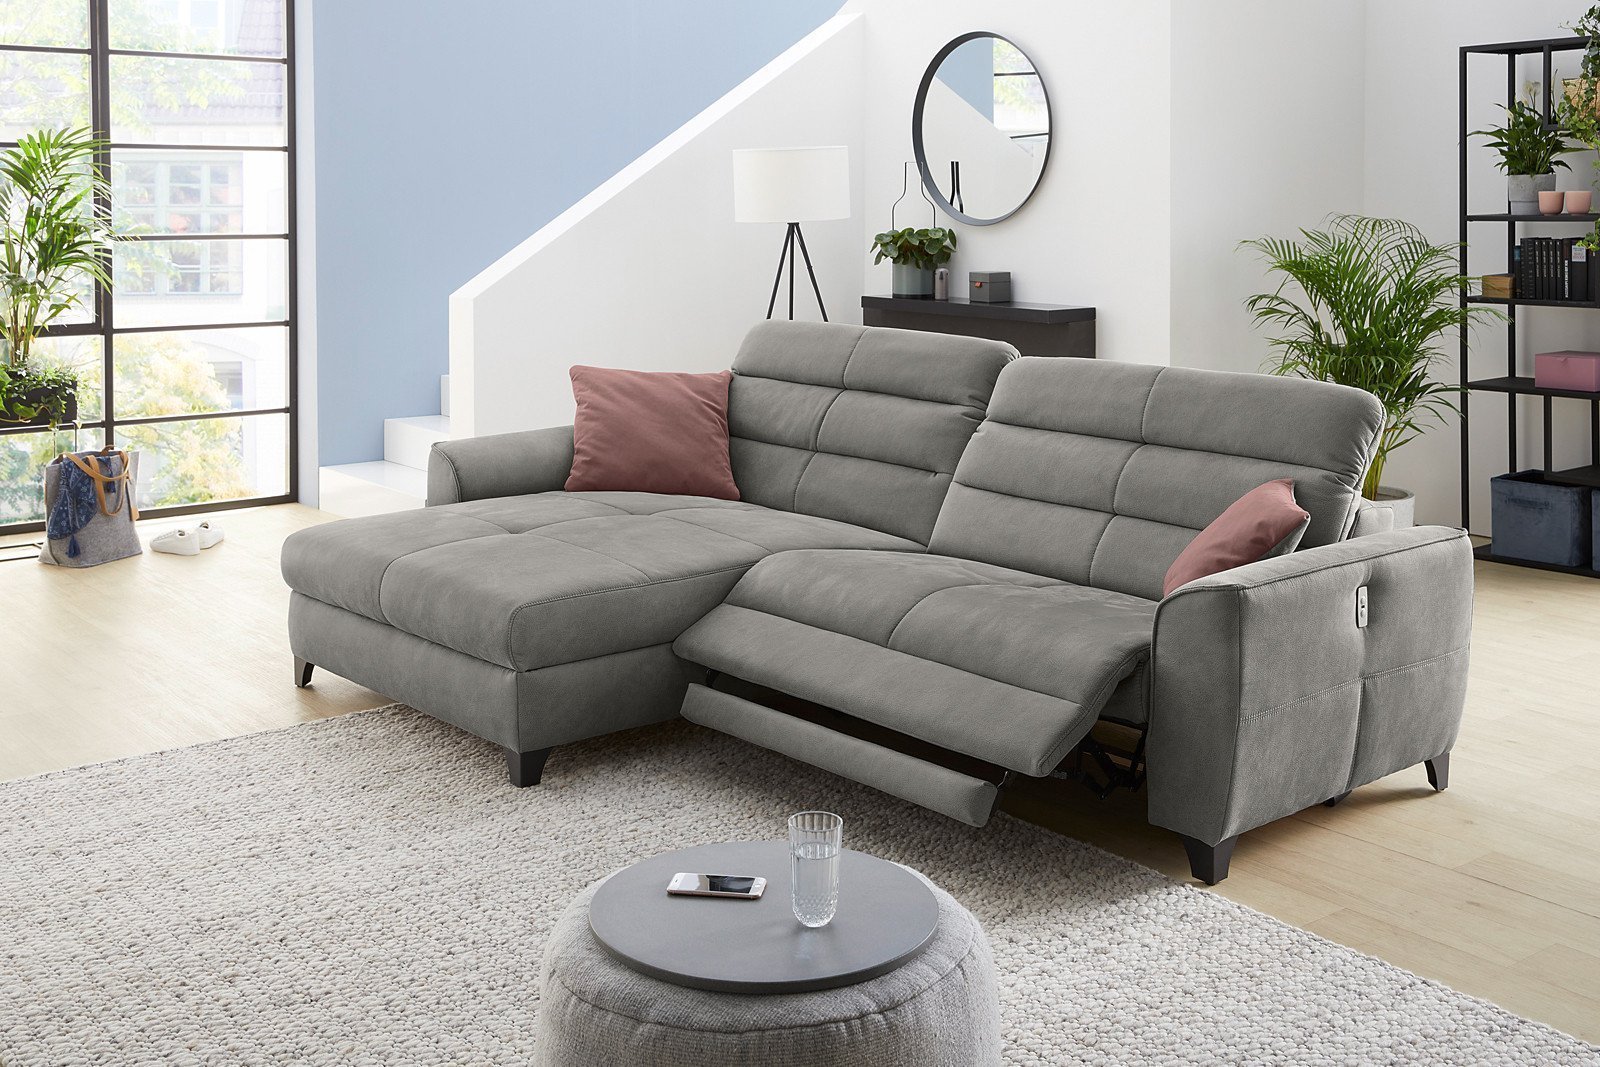 Jockenhöfer Double-One Sofa in L-Form grau | Möbel Letz - Ihr Online-Shop